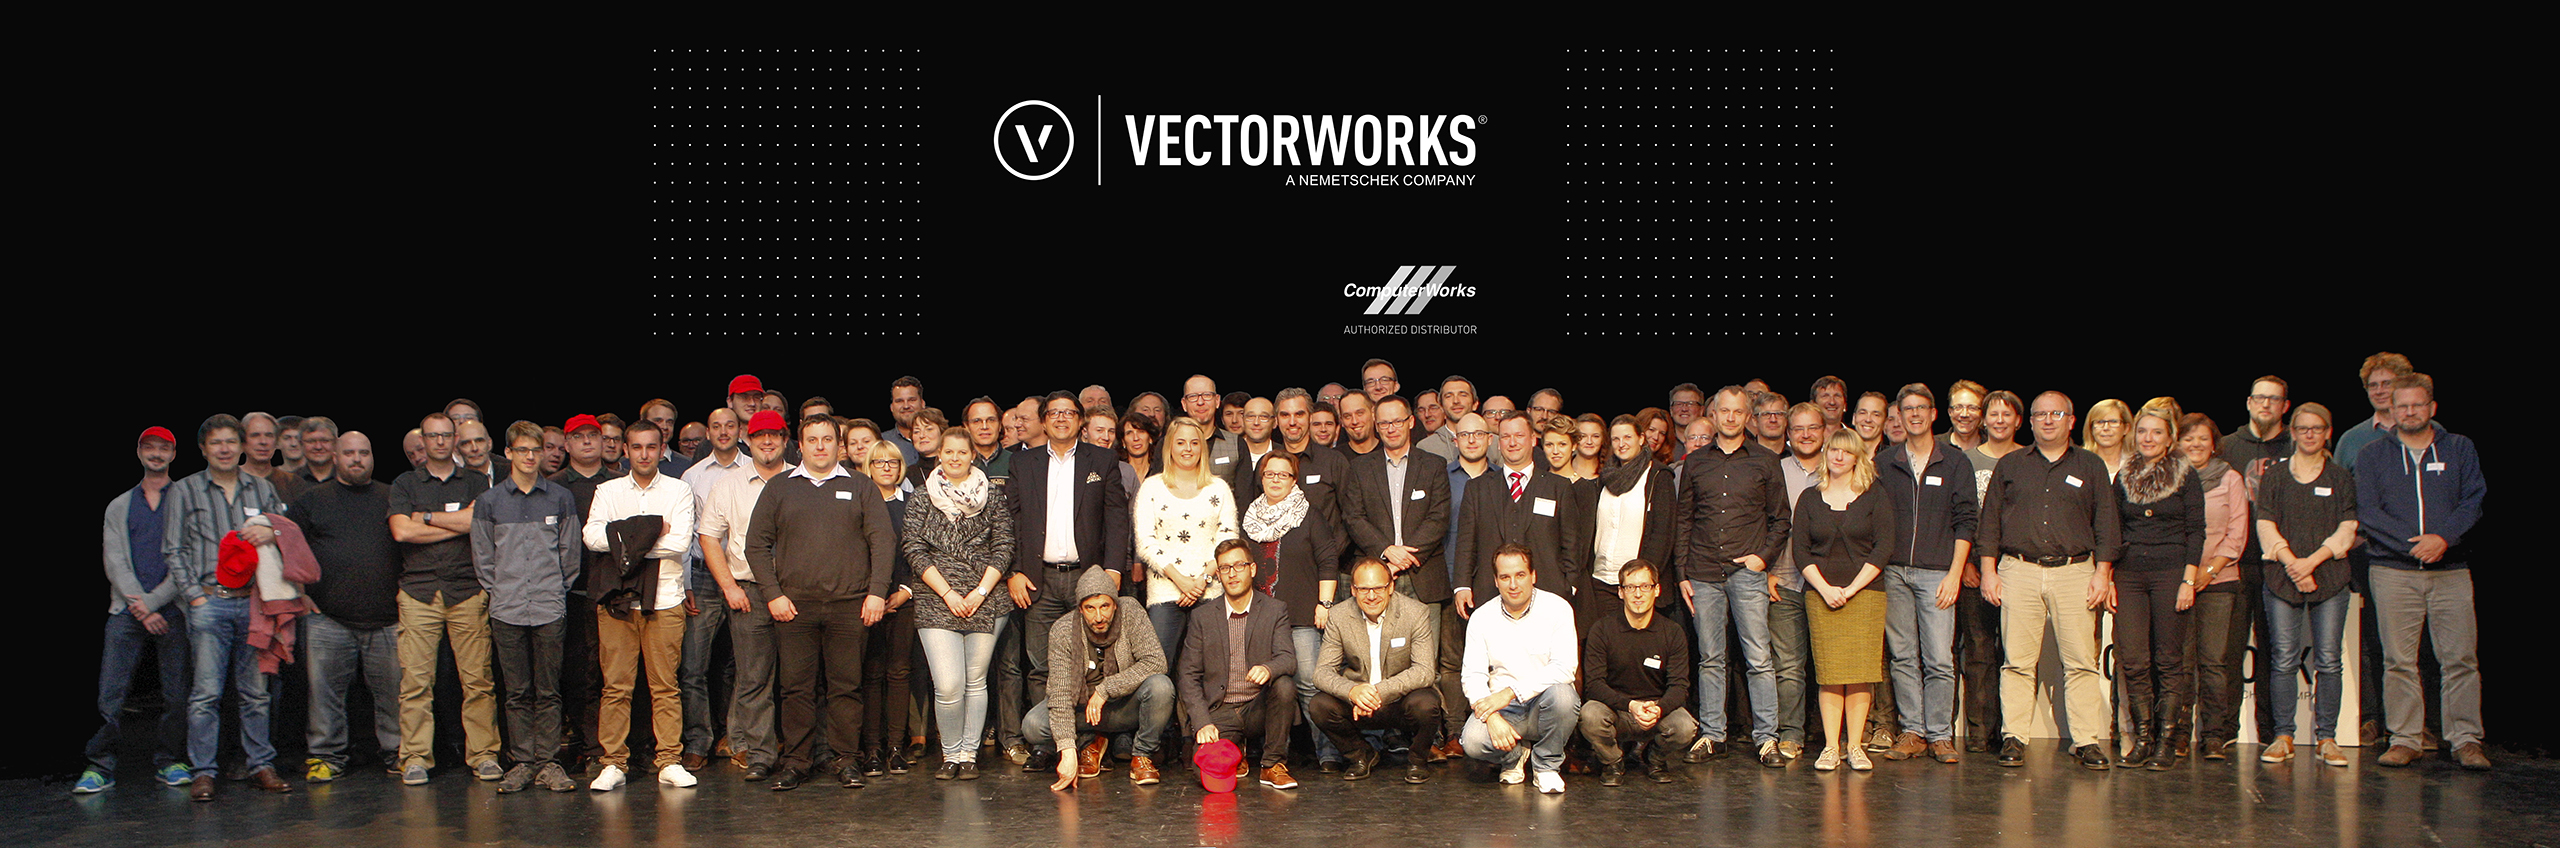 Vectorworks Team